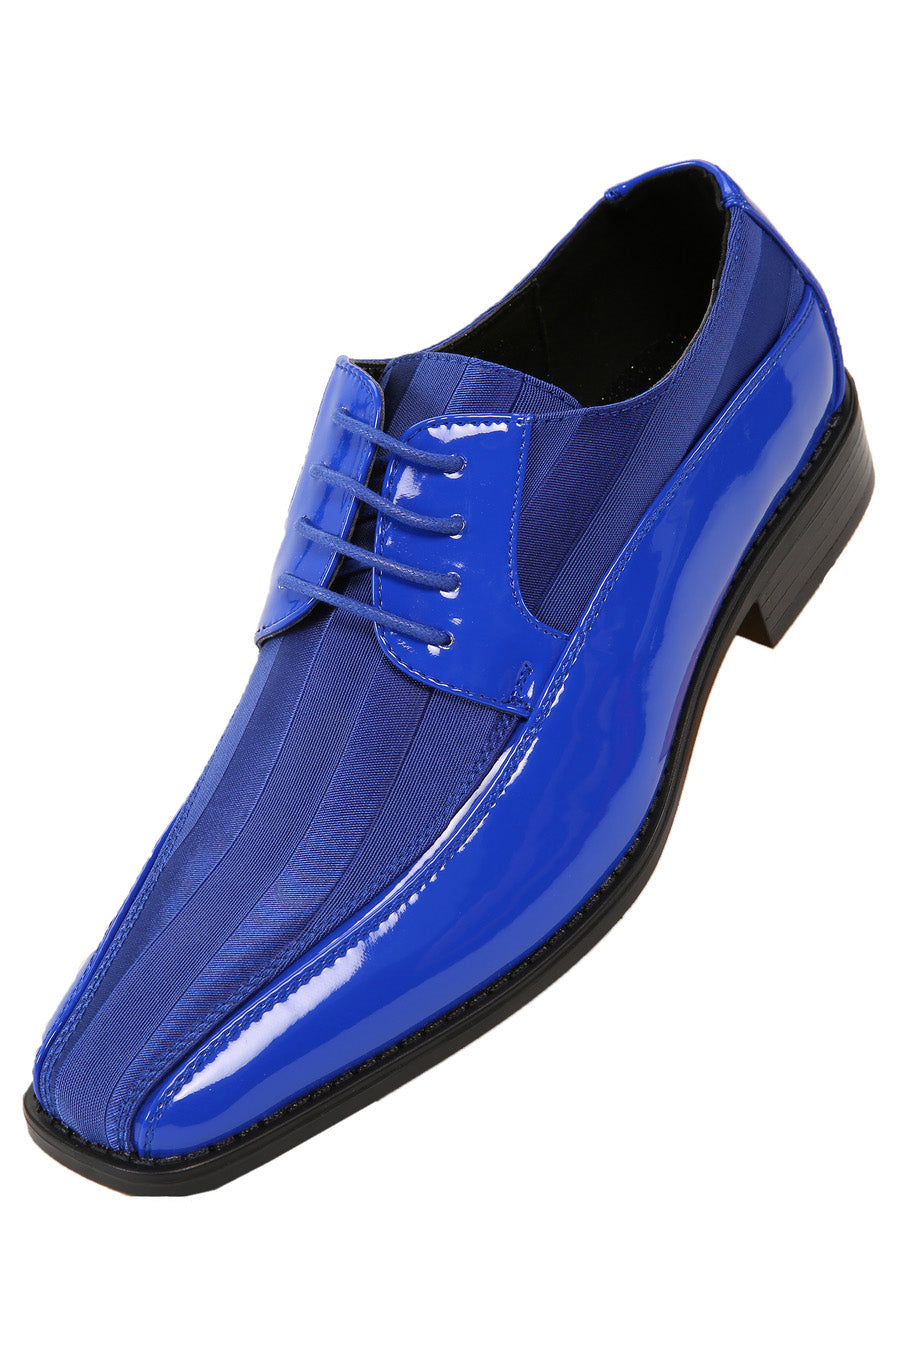 Viotti "179" Royal Blue Striped Tuxedo Shoes